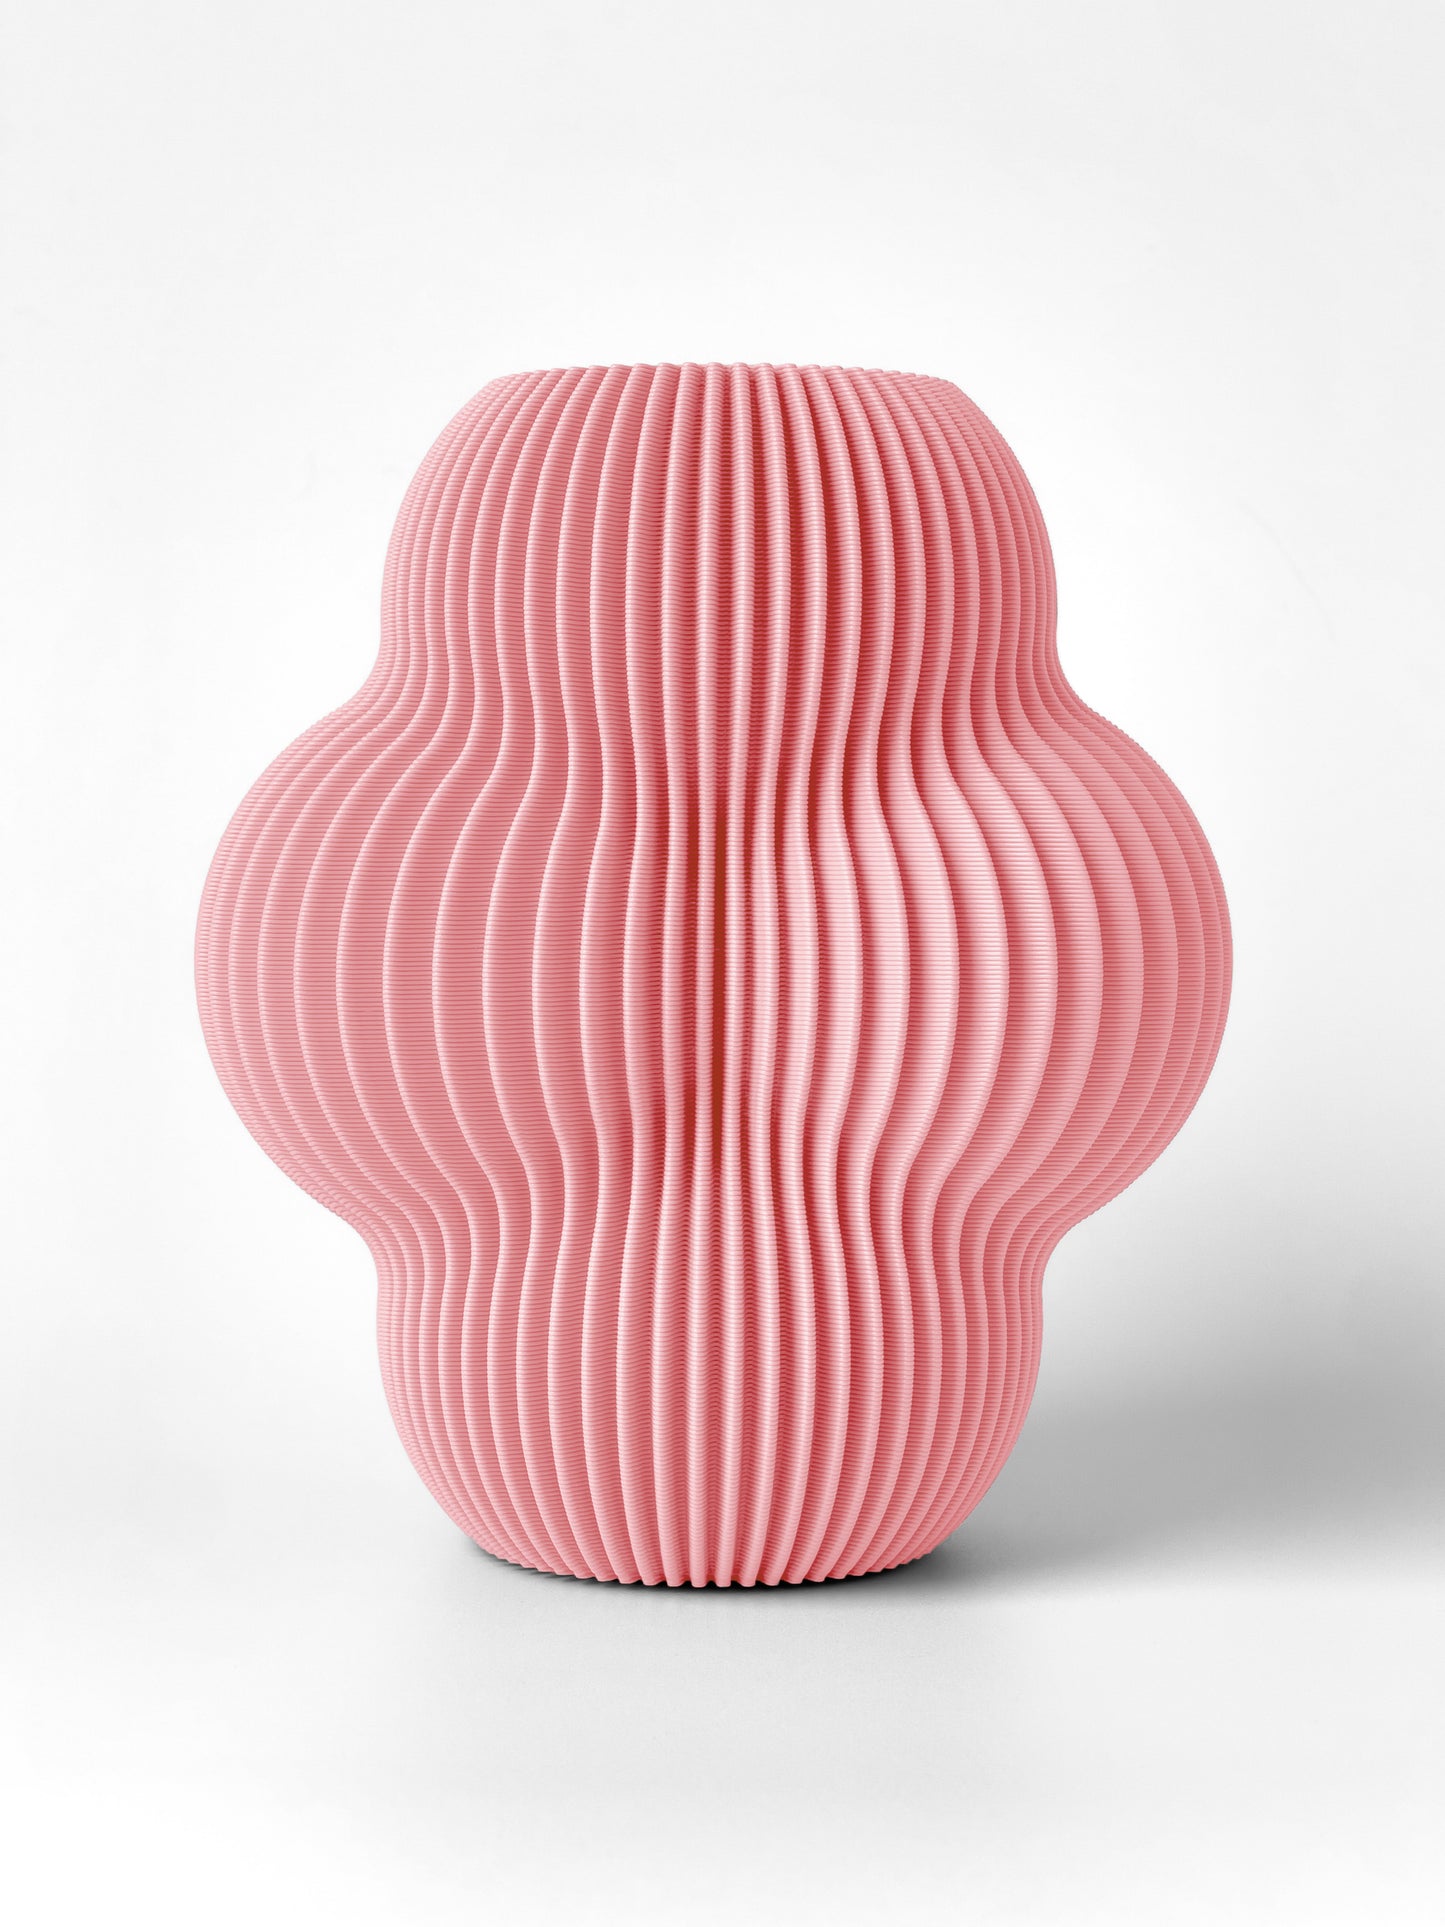 Orb Vase